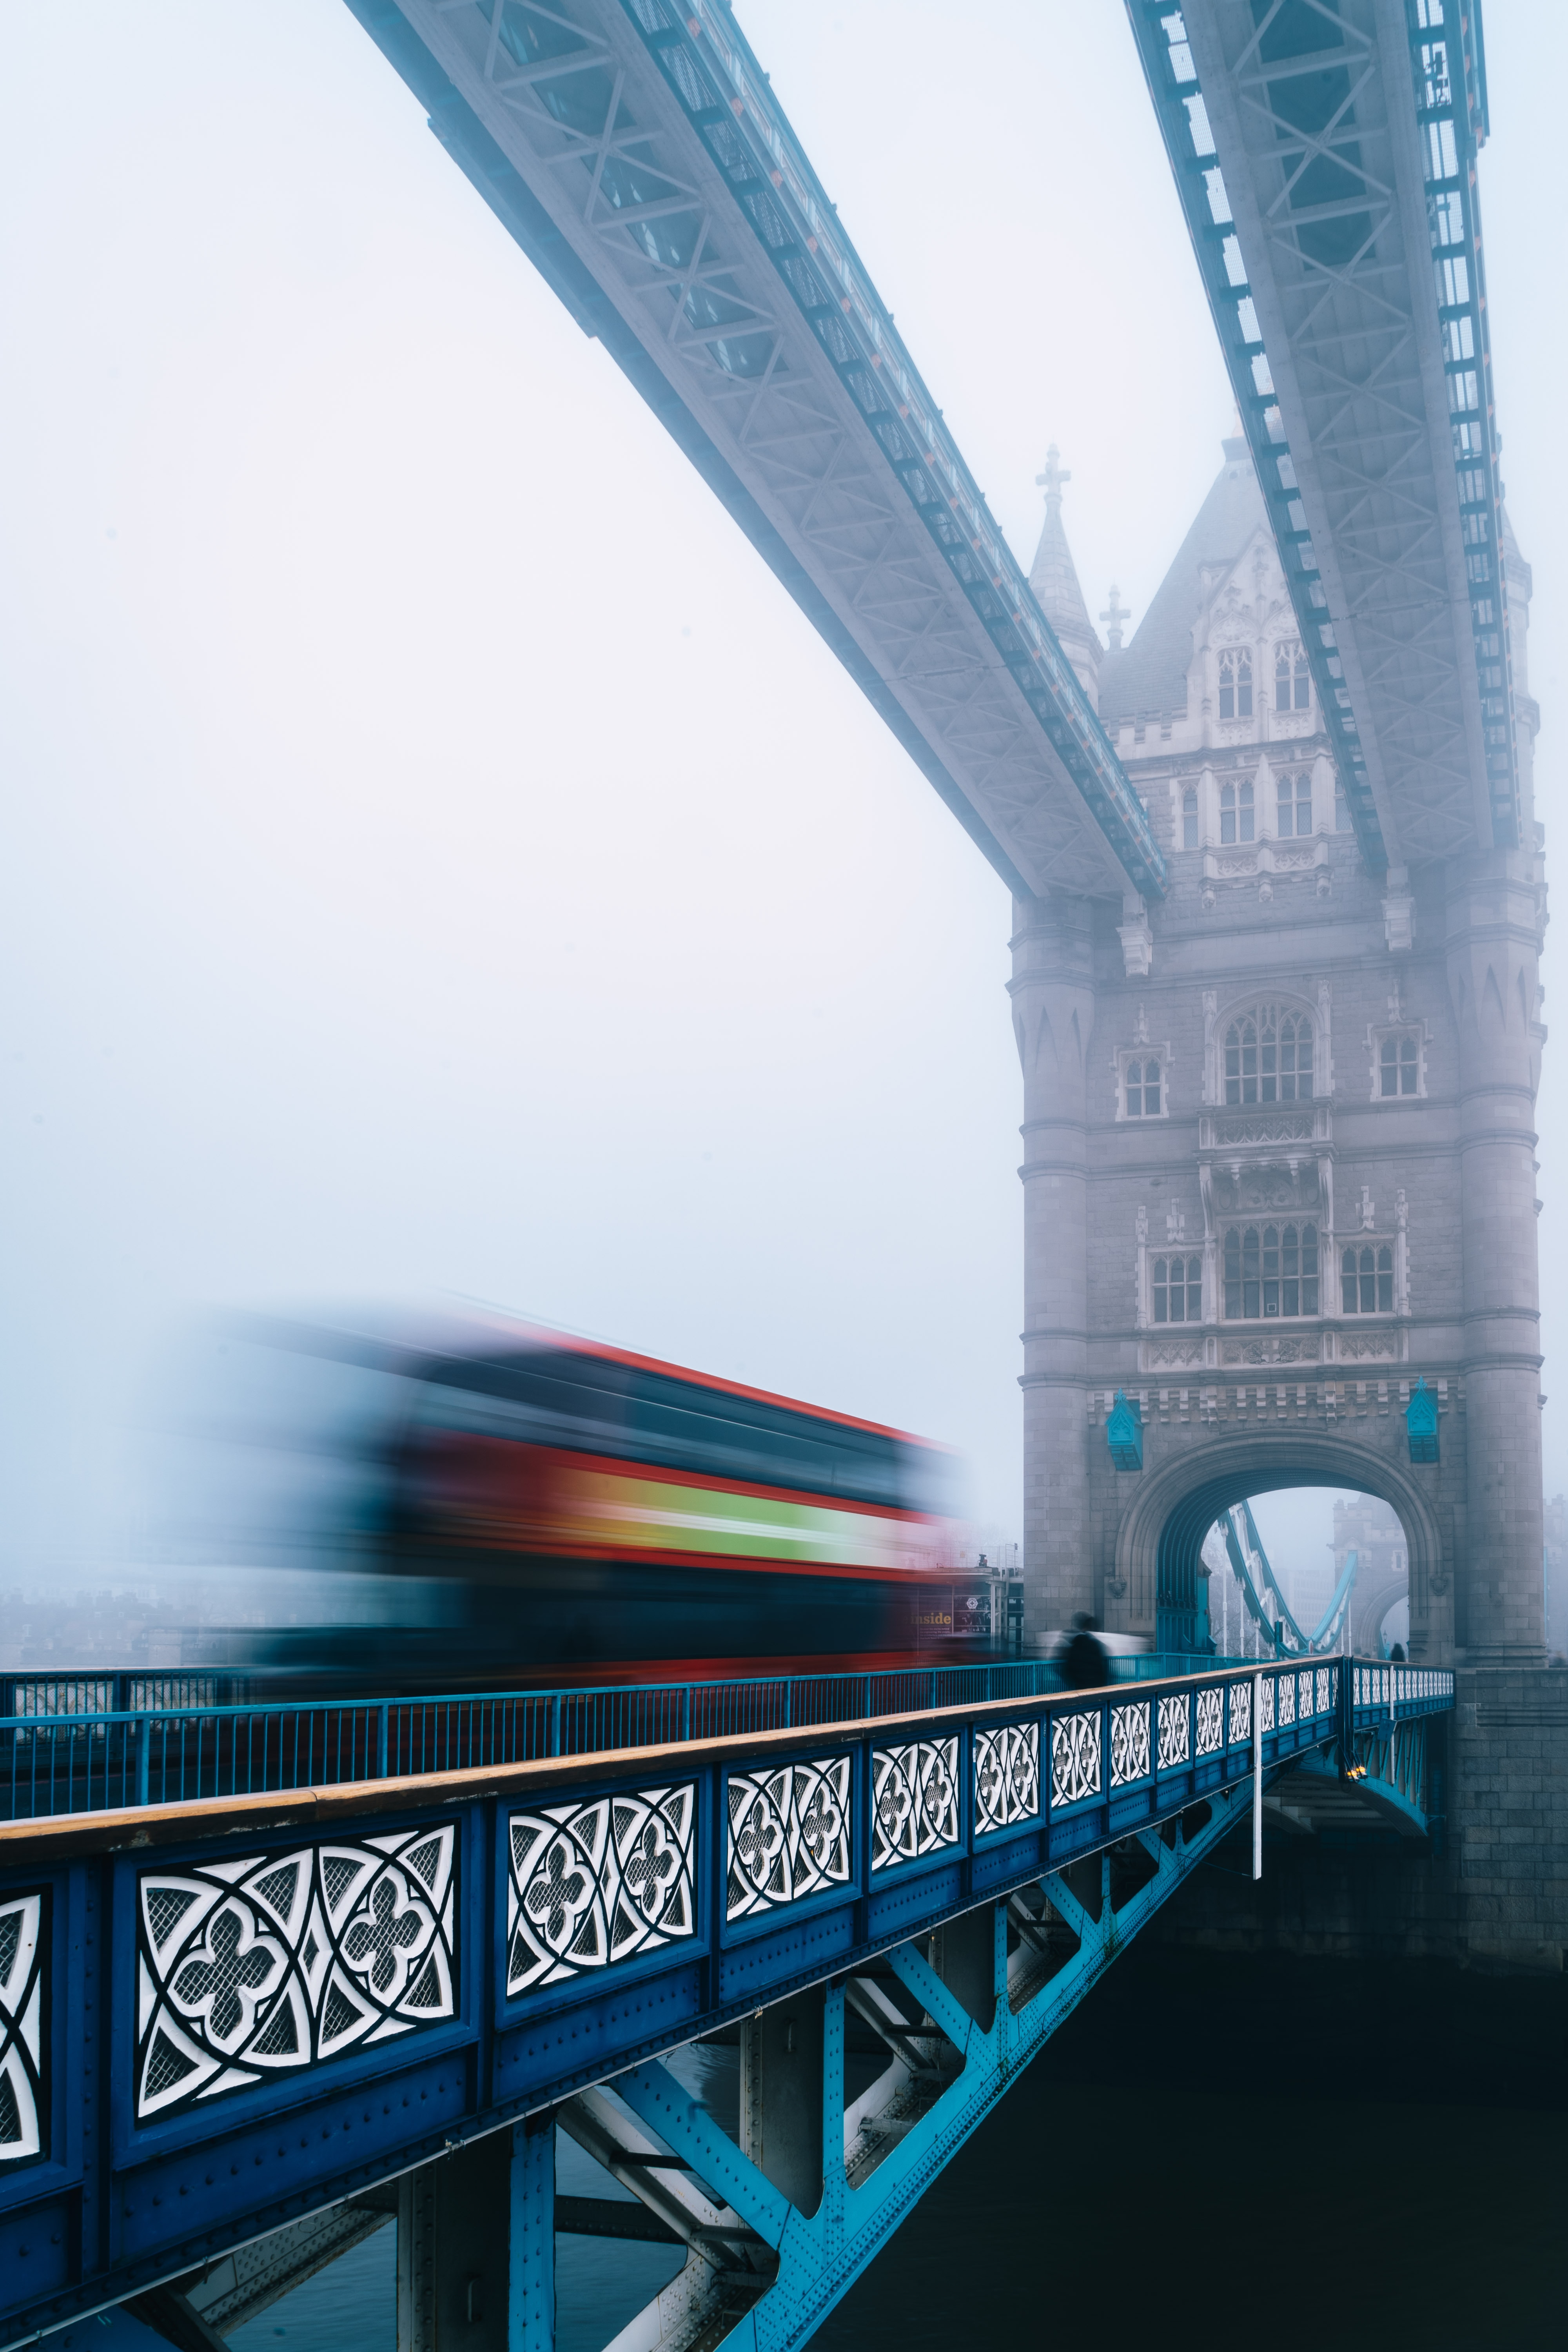 long exposure, cities, architecture, building, fog, bridge wallpaper for mobile